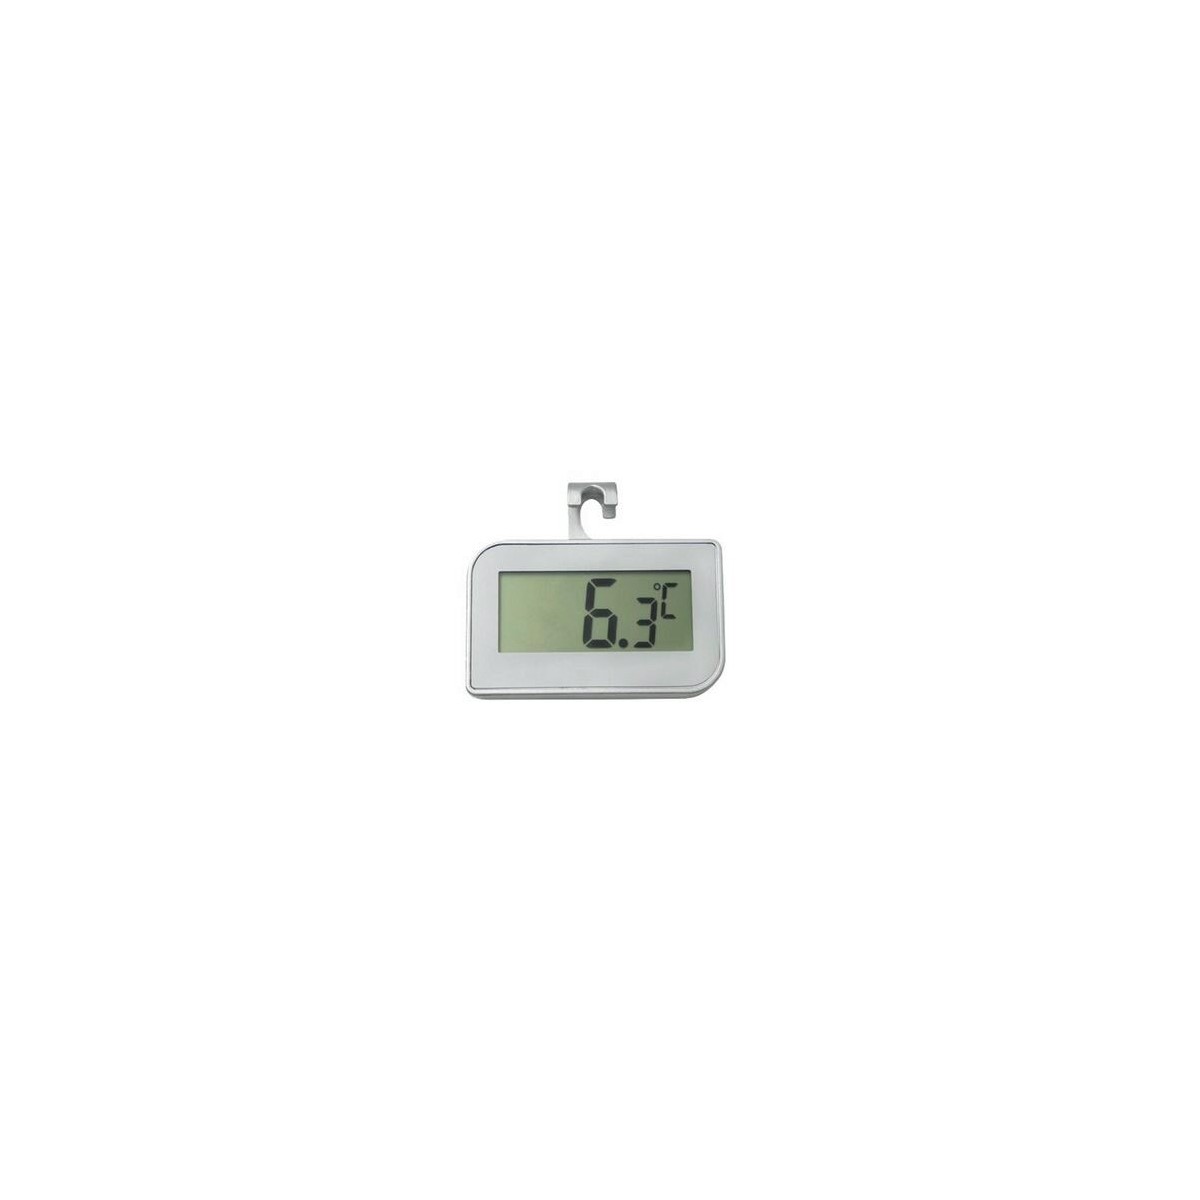 ALLA THERMOMETRE DIGITAL PR REFRIGERATEUR IP65  A/CROCHET -20°+50°C  